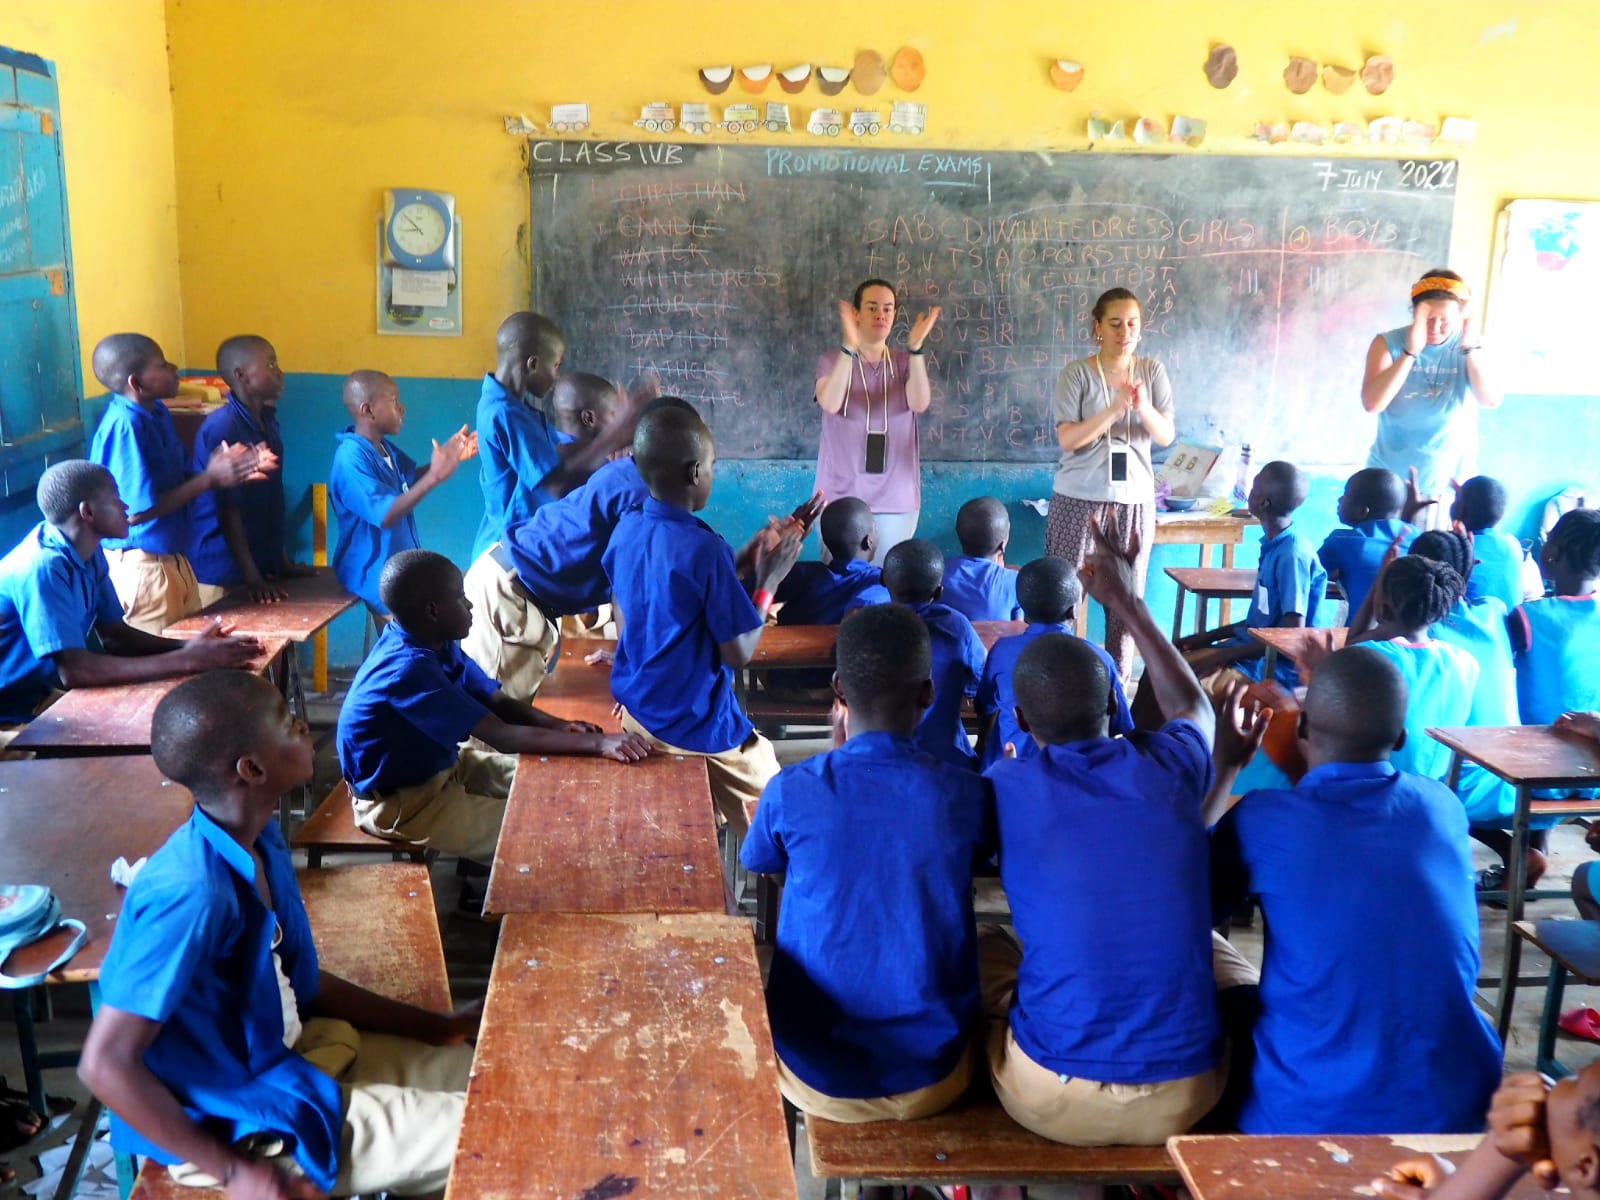 Peñalara collaborates with an educational facility in Sierra Leone